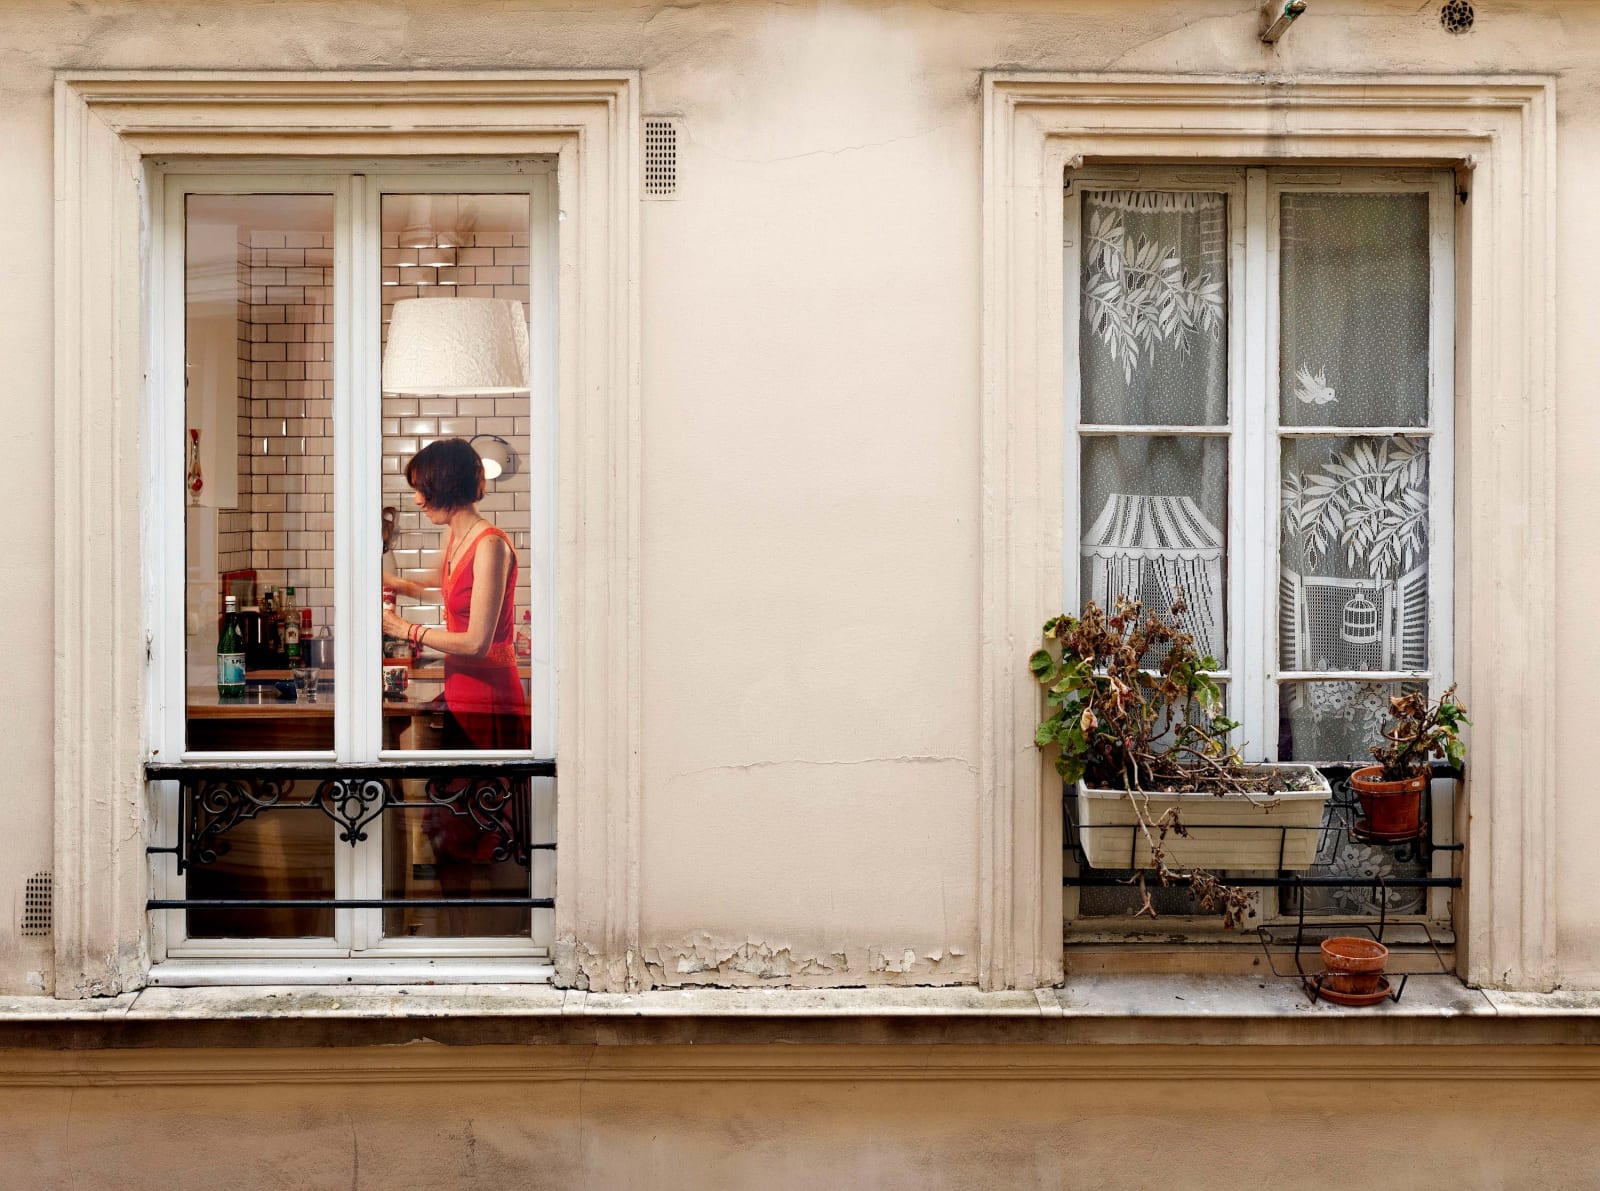 Gail Albert Halaban Out My Window Rue Jouye Rouve, Paris, 20e, le 18 mai woman in red dress in kitchen window box planter